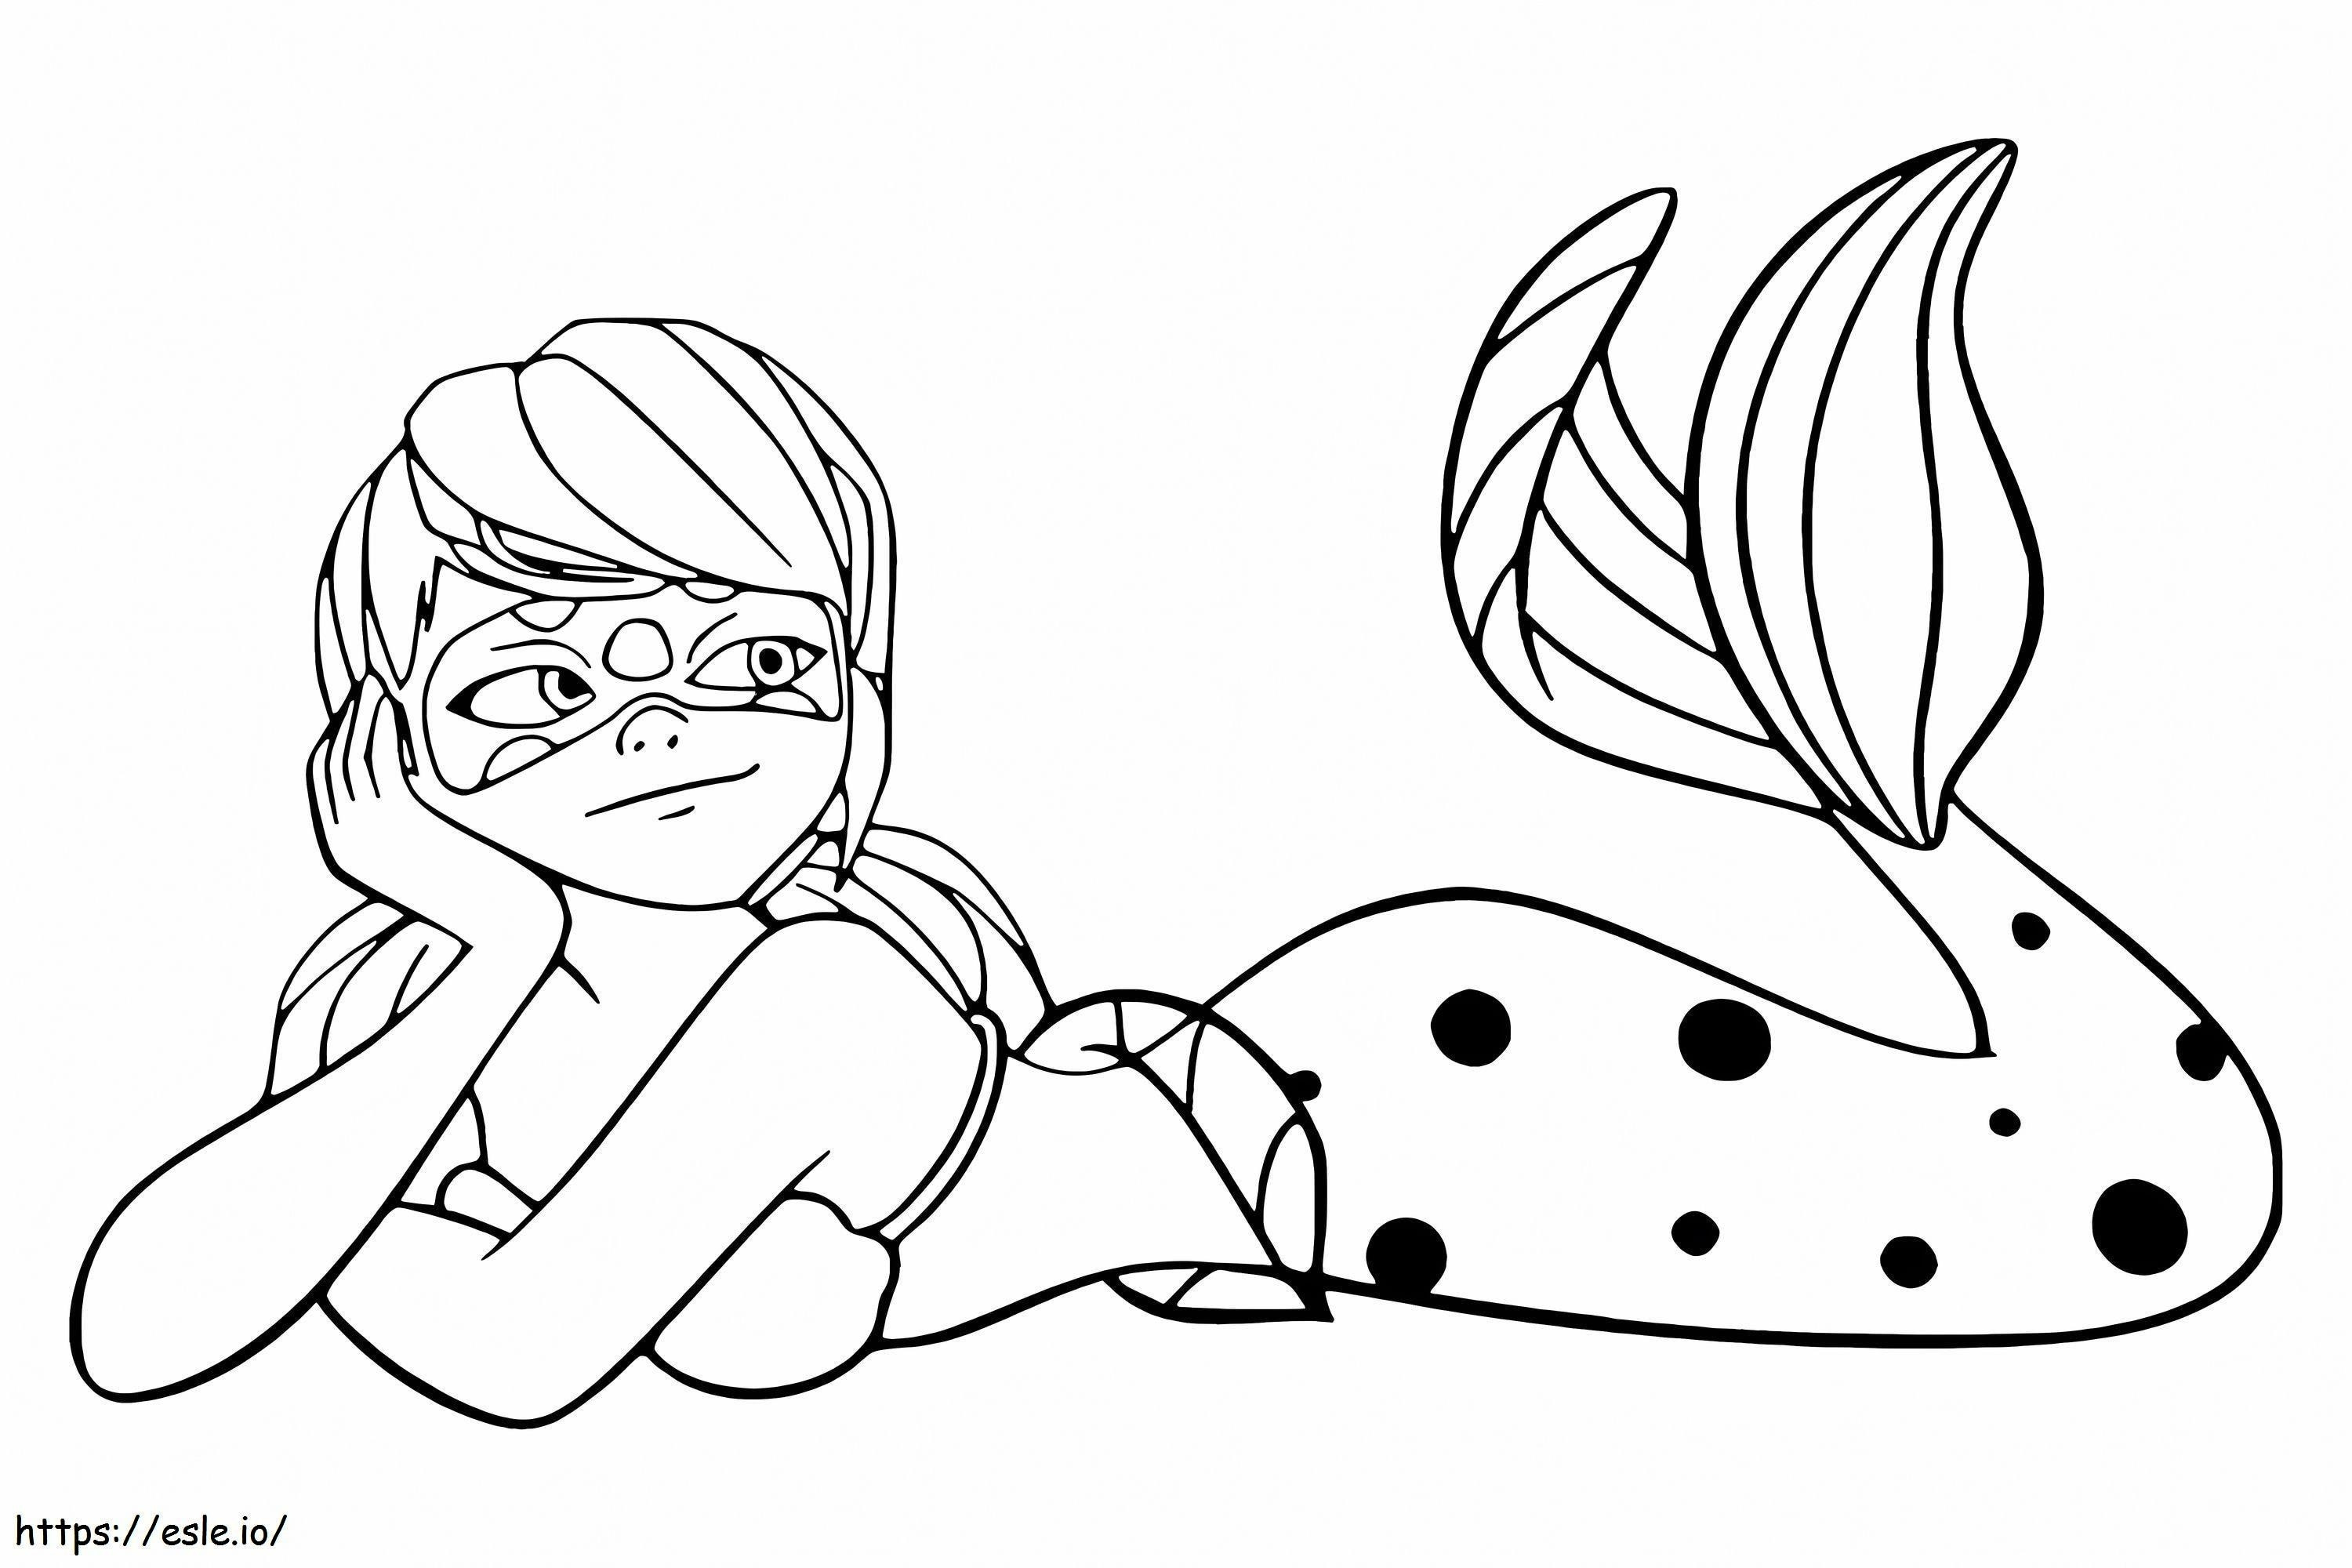 Ladybug 2 coloring page